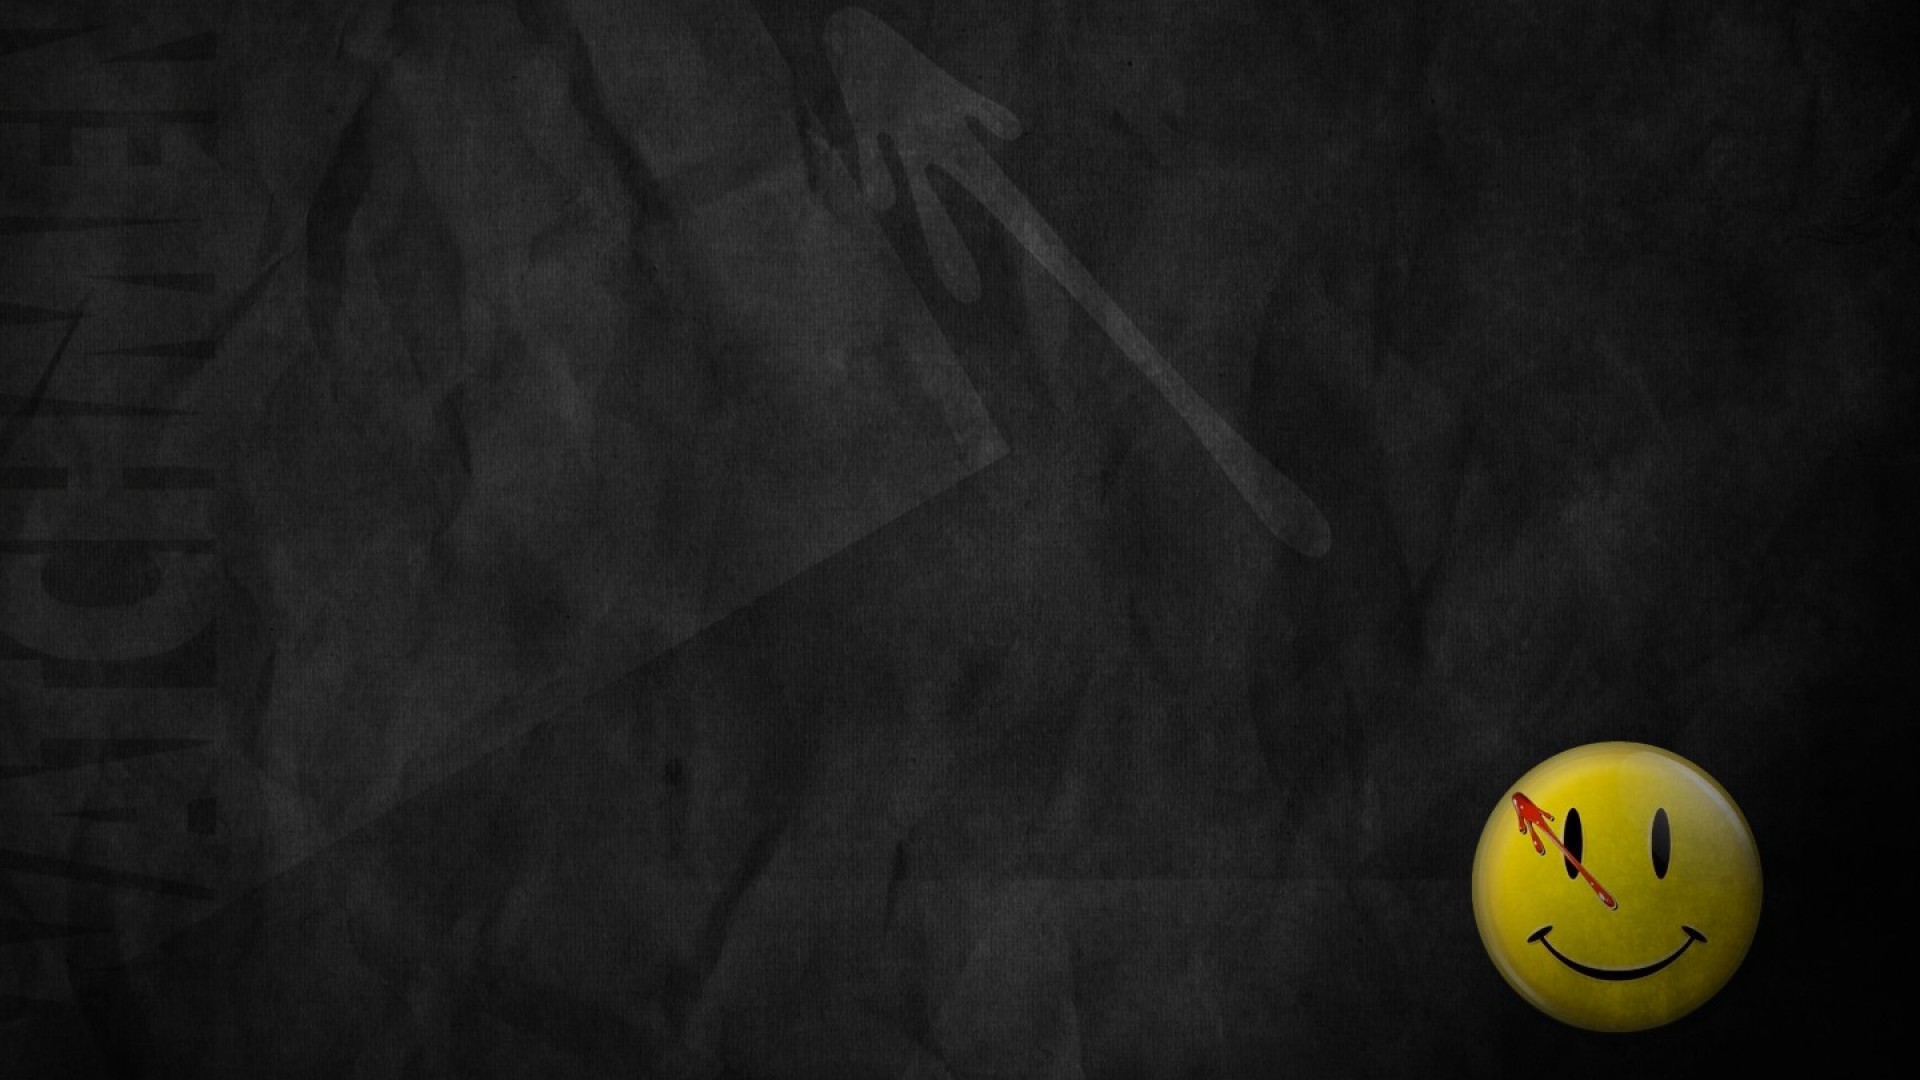 ScreenHeaven Watchmen black background smiley face 1920x1080